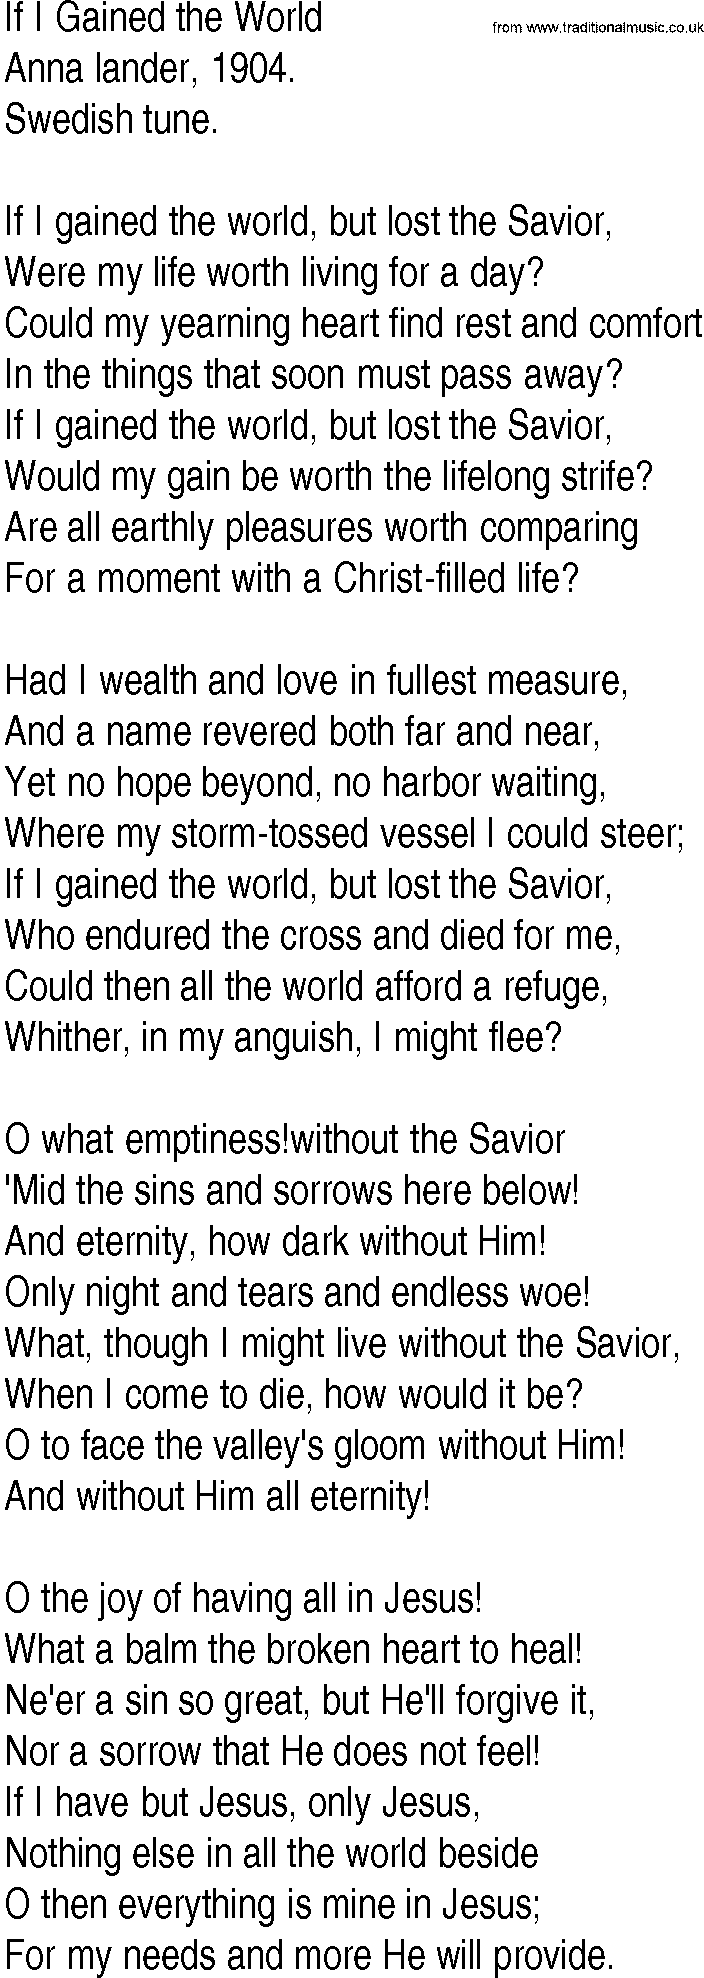 Hymn and Gospel Song: If I Gained the World by Anna Ölander lyrics